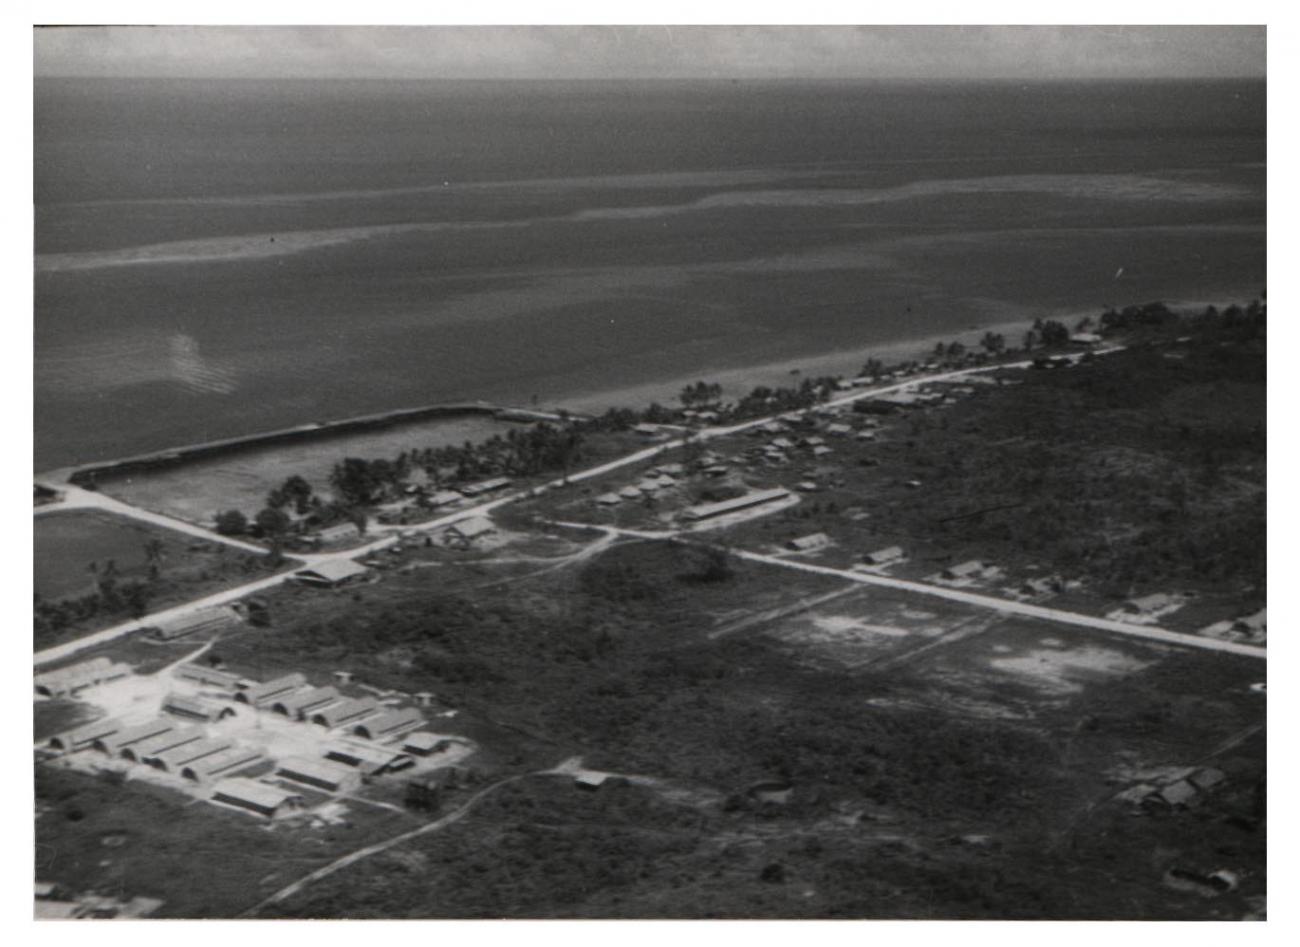 BD/54/43 - 
Biak, site of new Catholic Navy Club
